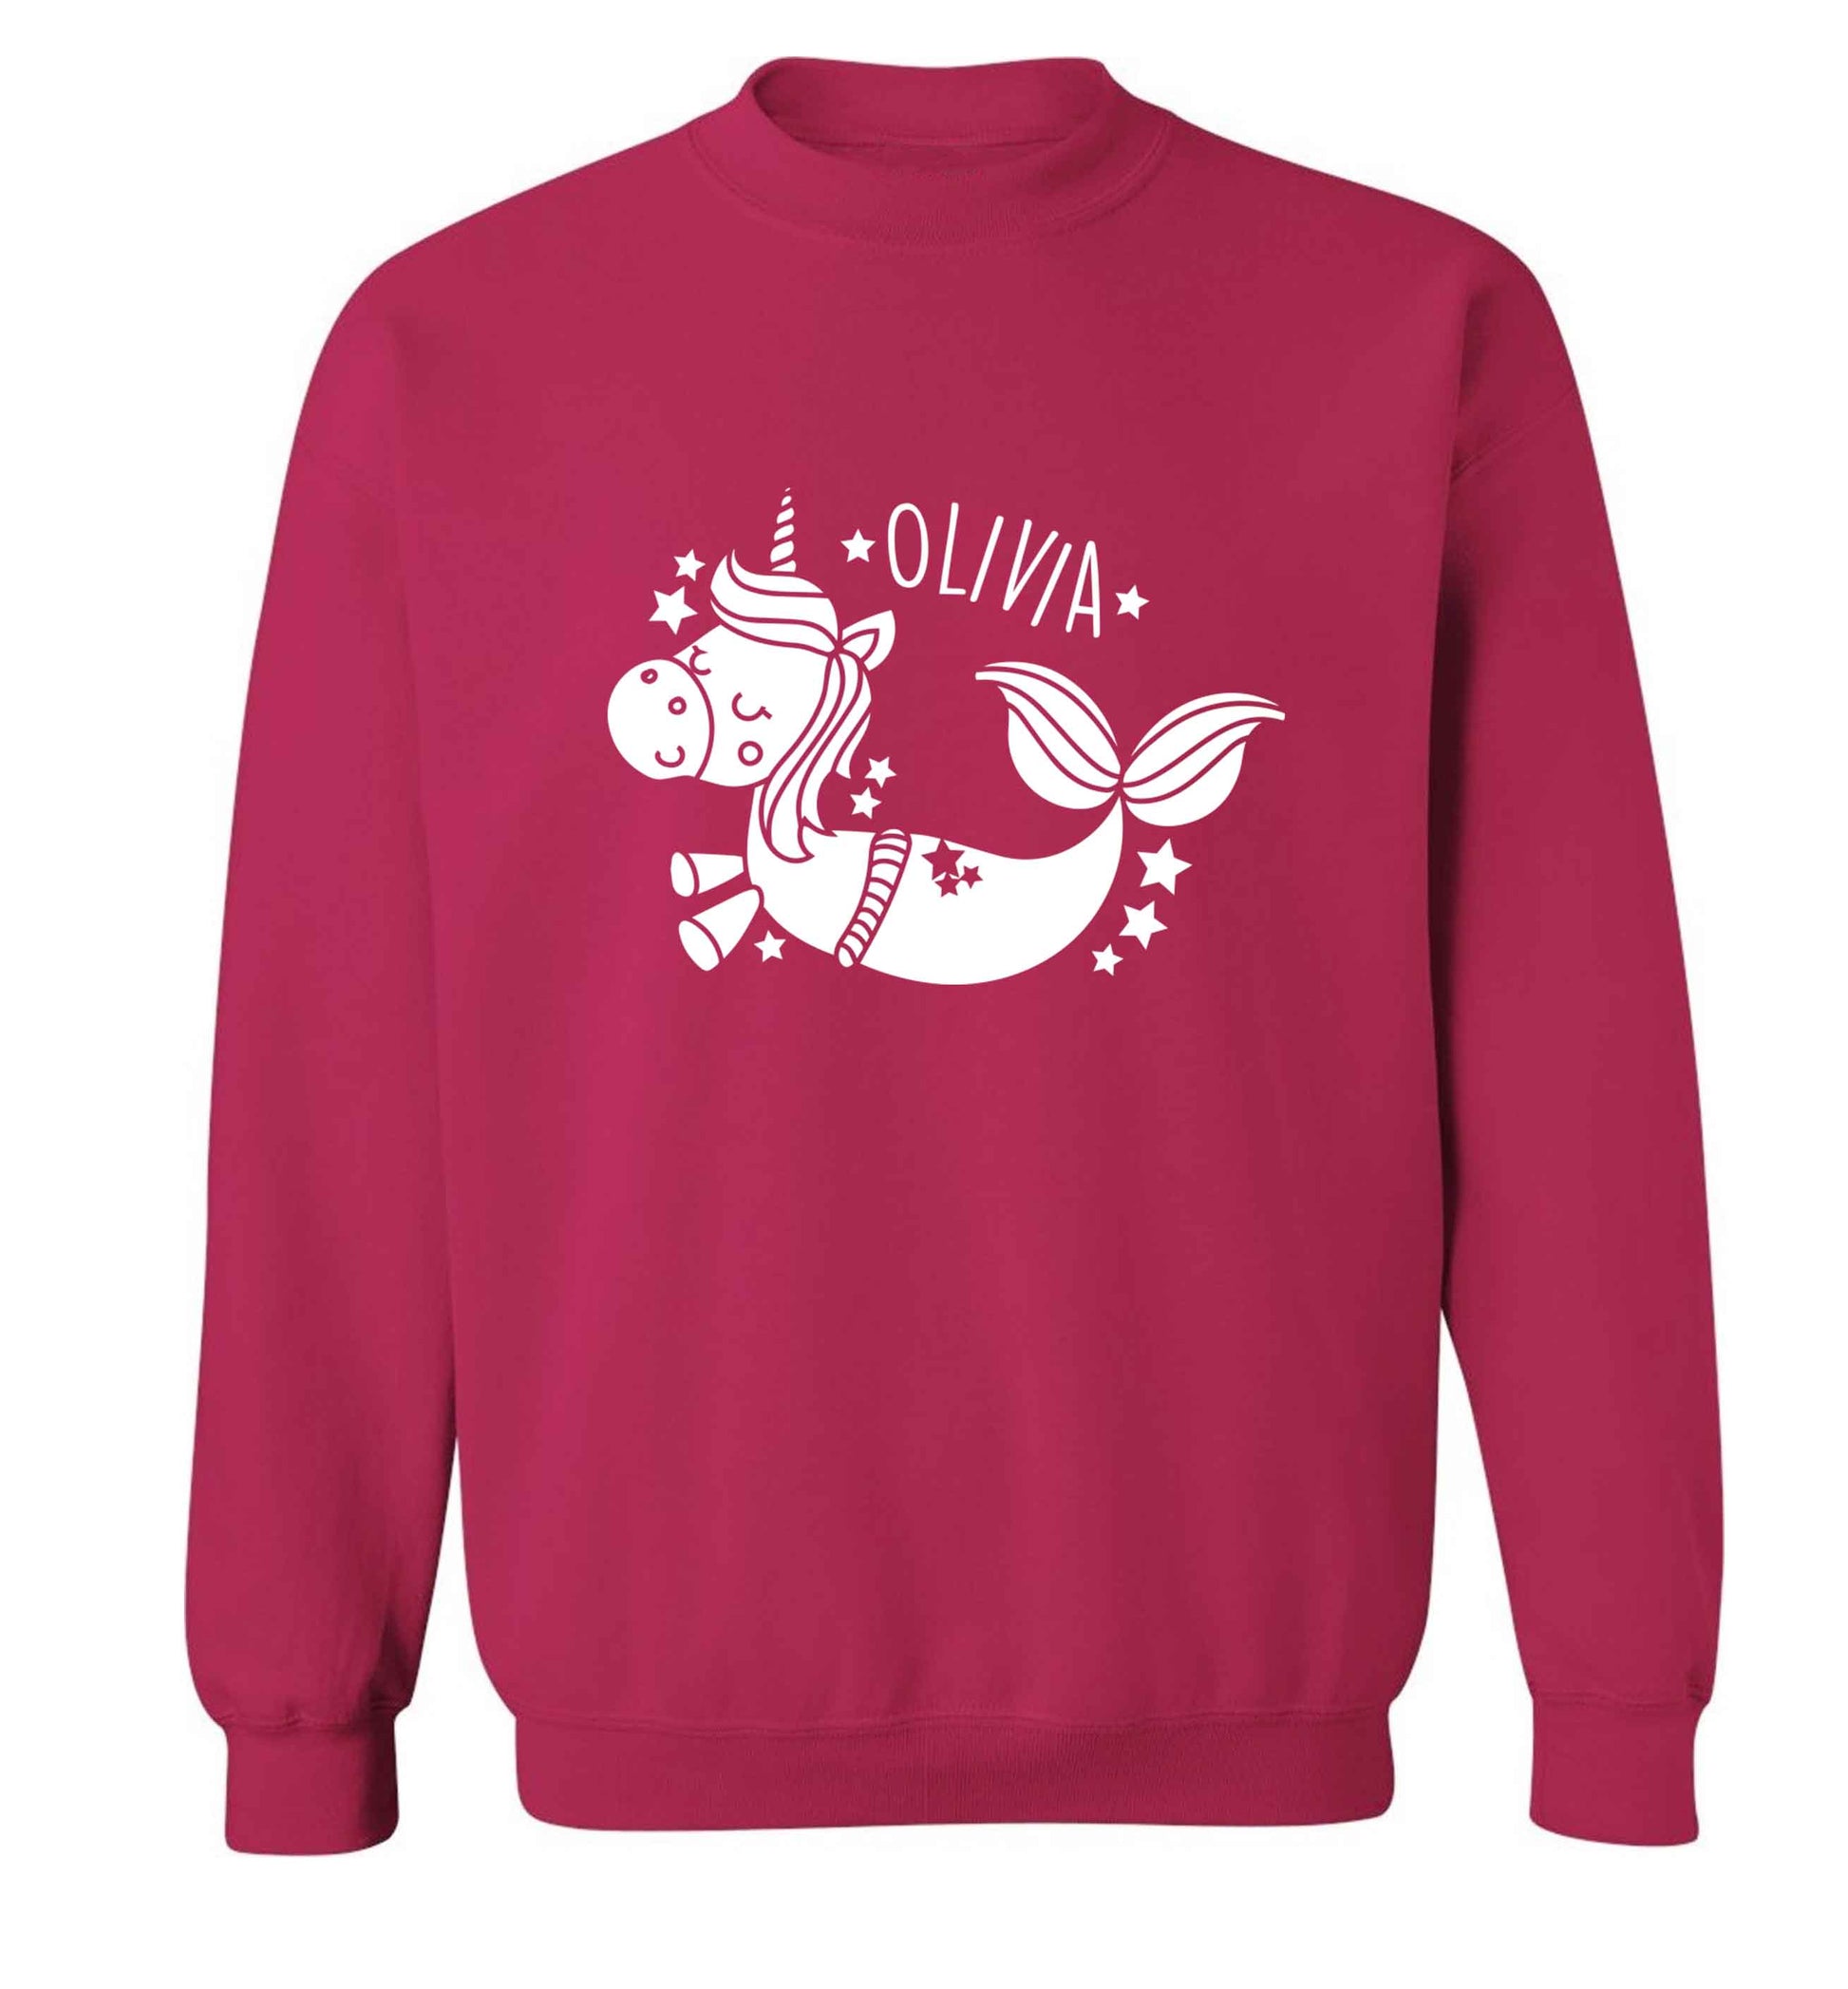 Unicorn mermaid - any name adult's unisex pink sweater 2XL